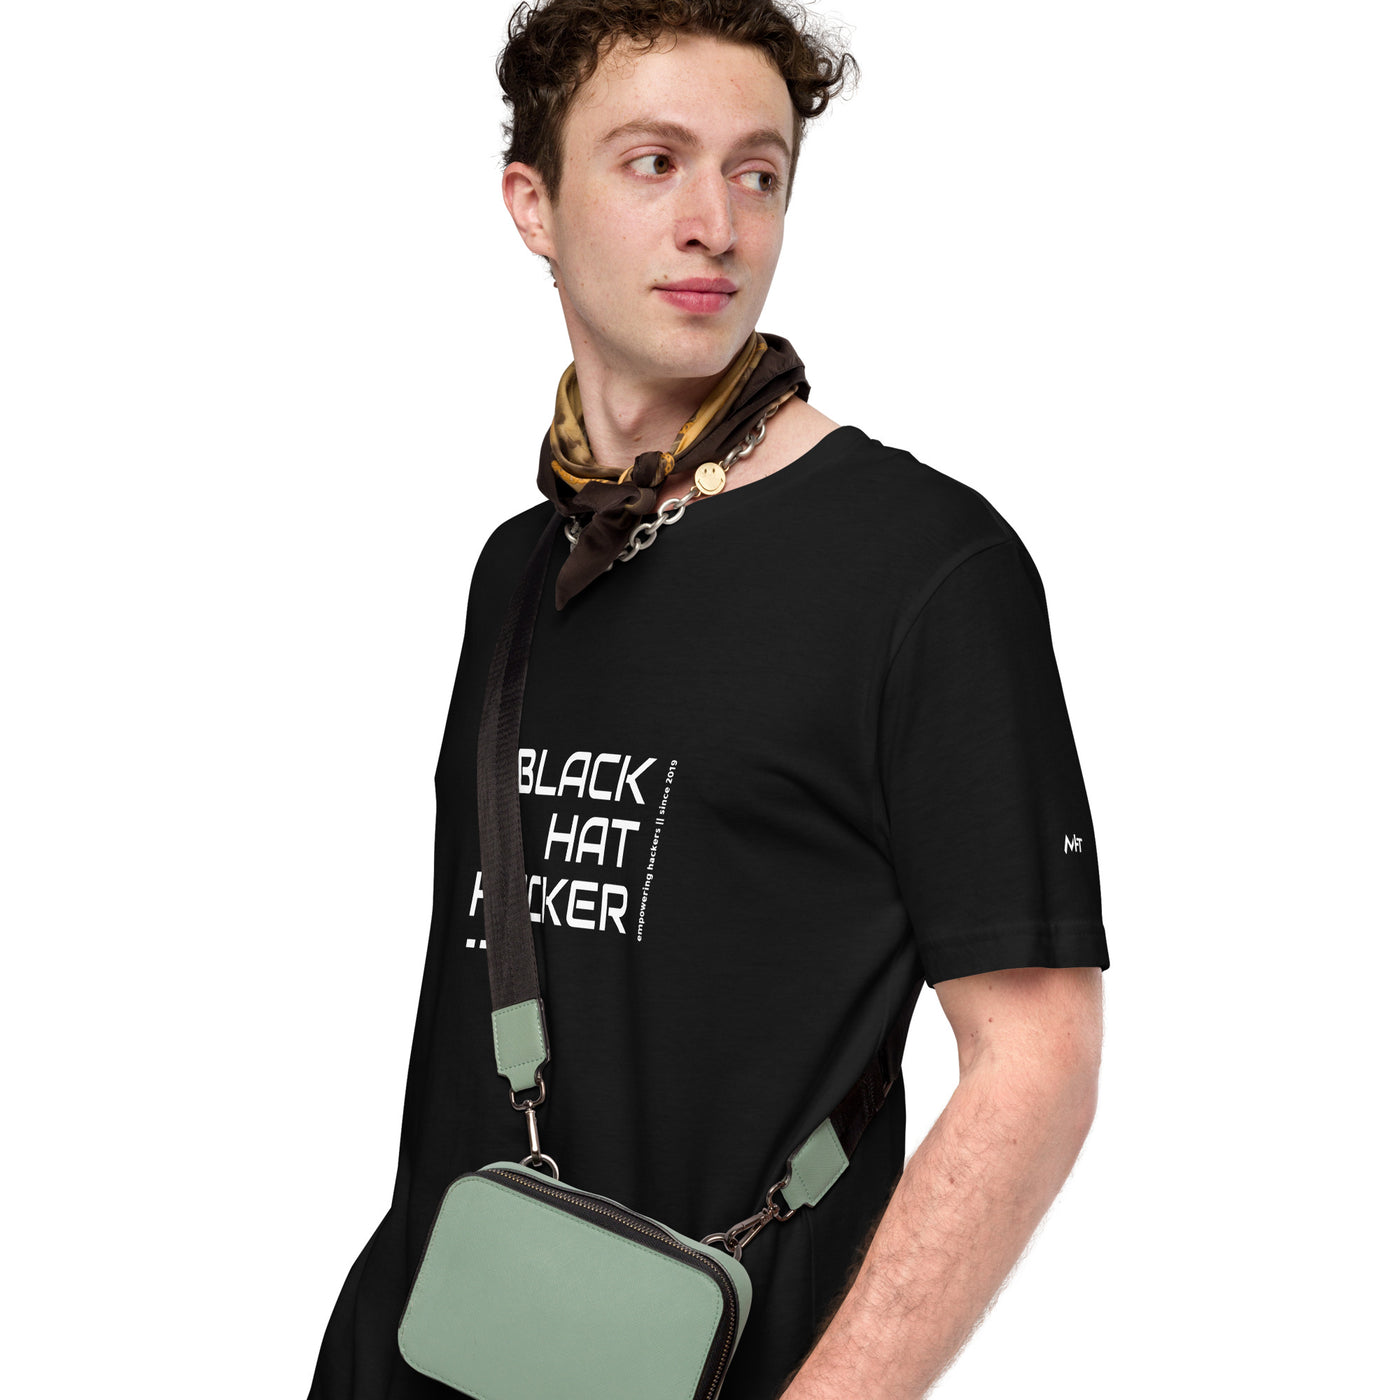 Black Hat Hacker V15 Unisex t-shirt